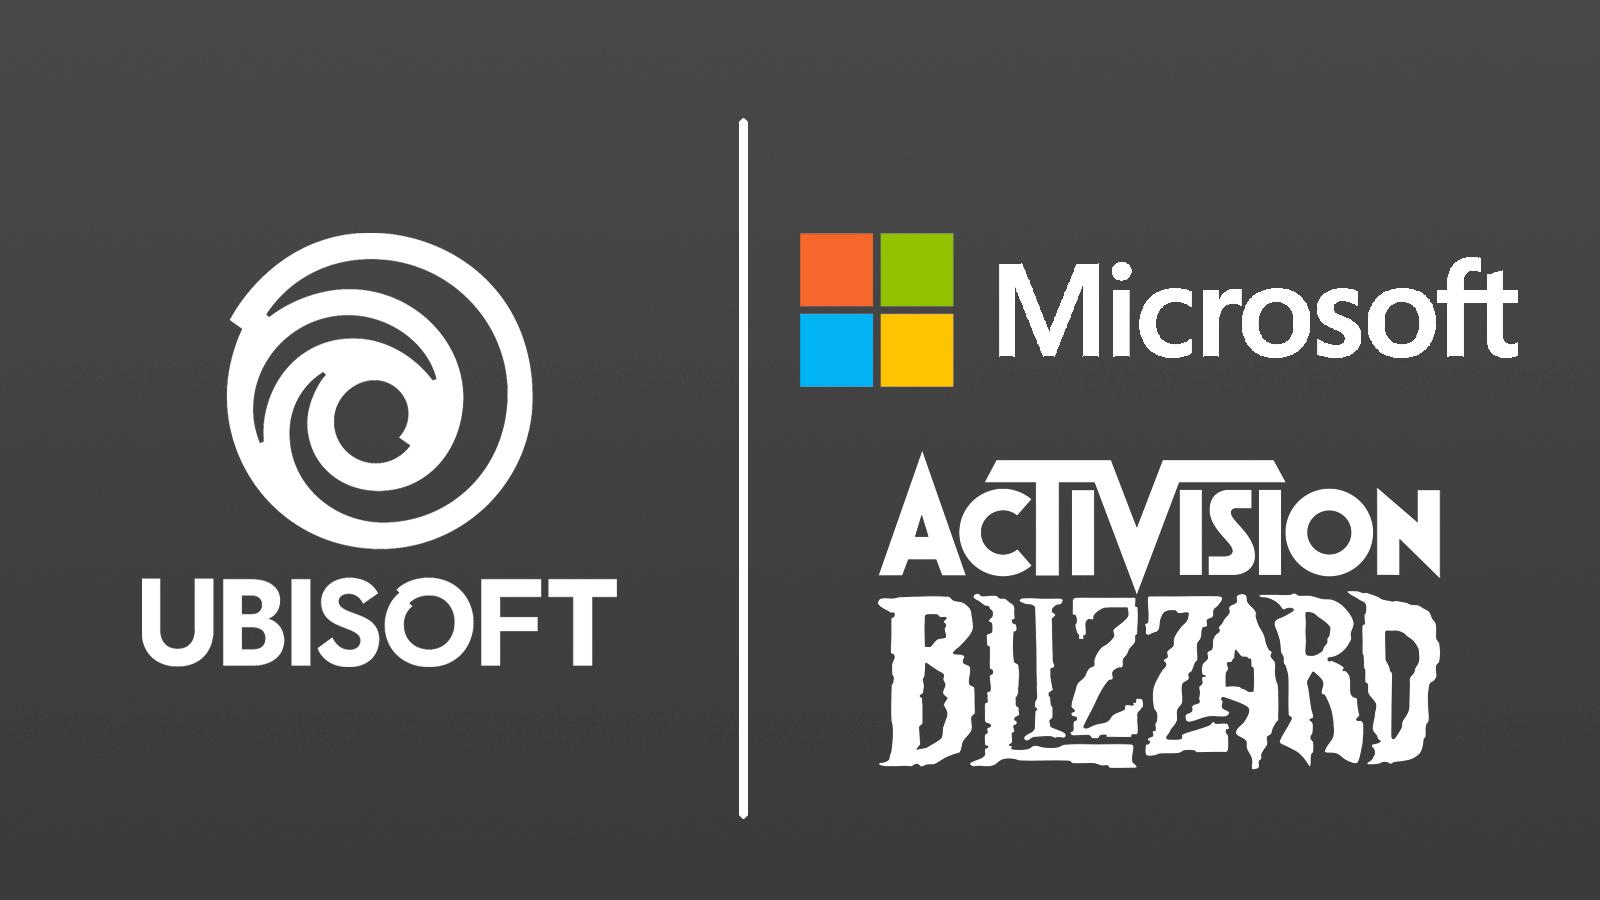 ubisoft, microsoft and activision blizzard logos